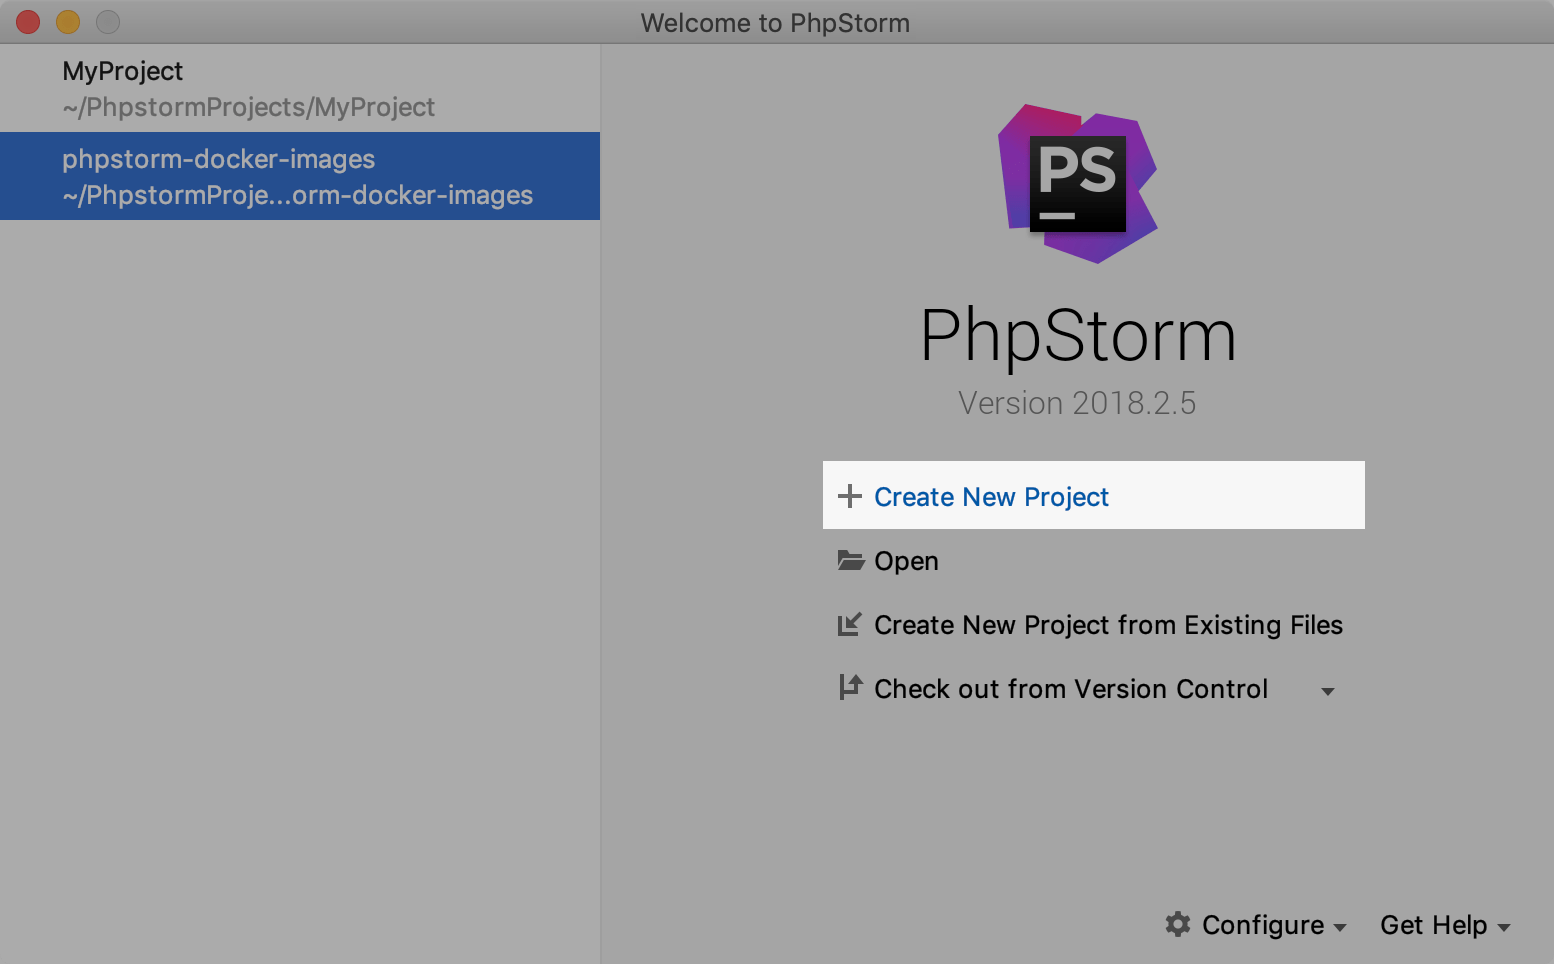 for mac download JetBrains PhpStorm 2023.1.3